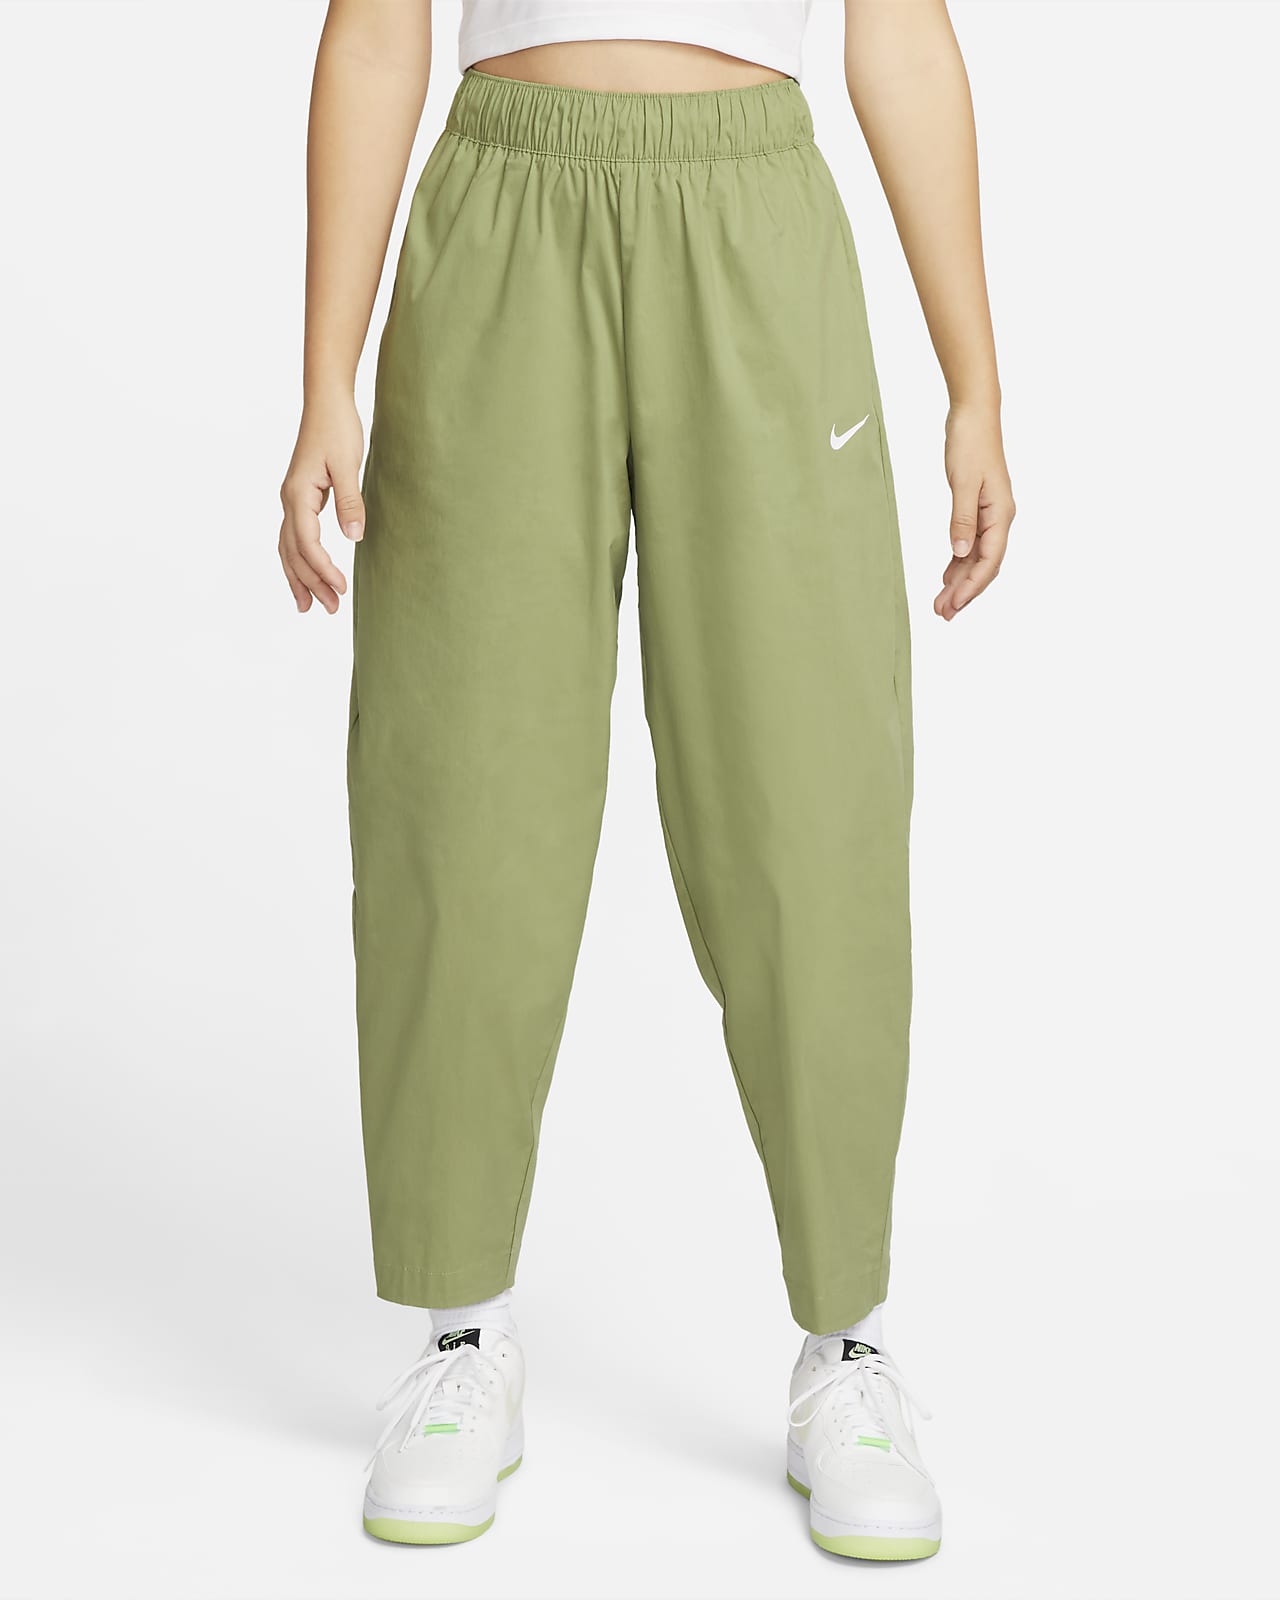 Pants con curvas de tiro alto para Nike Sportswear Nike MX